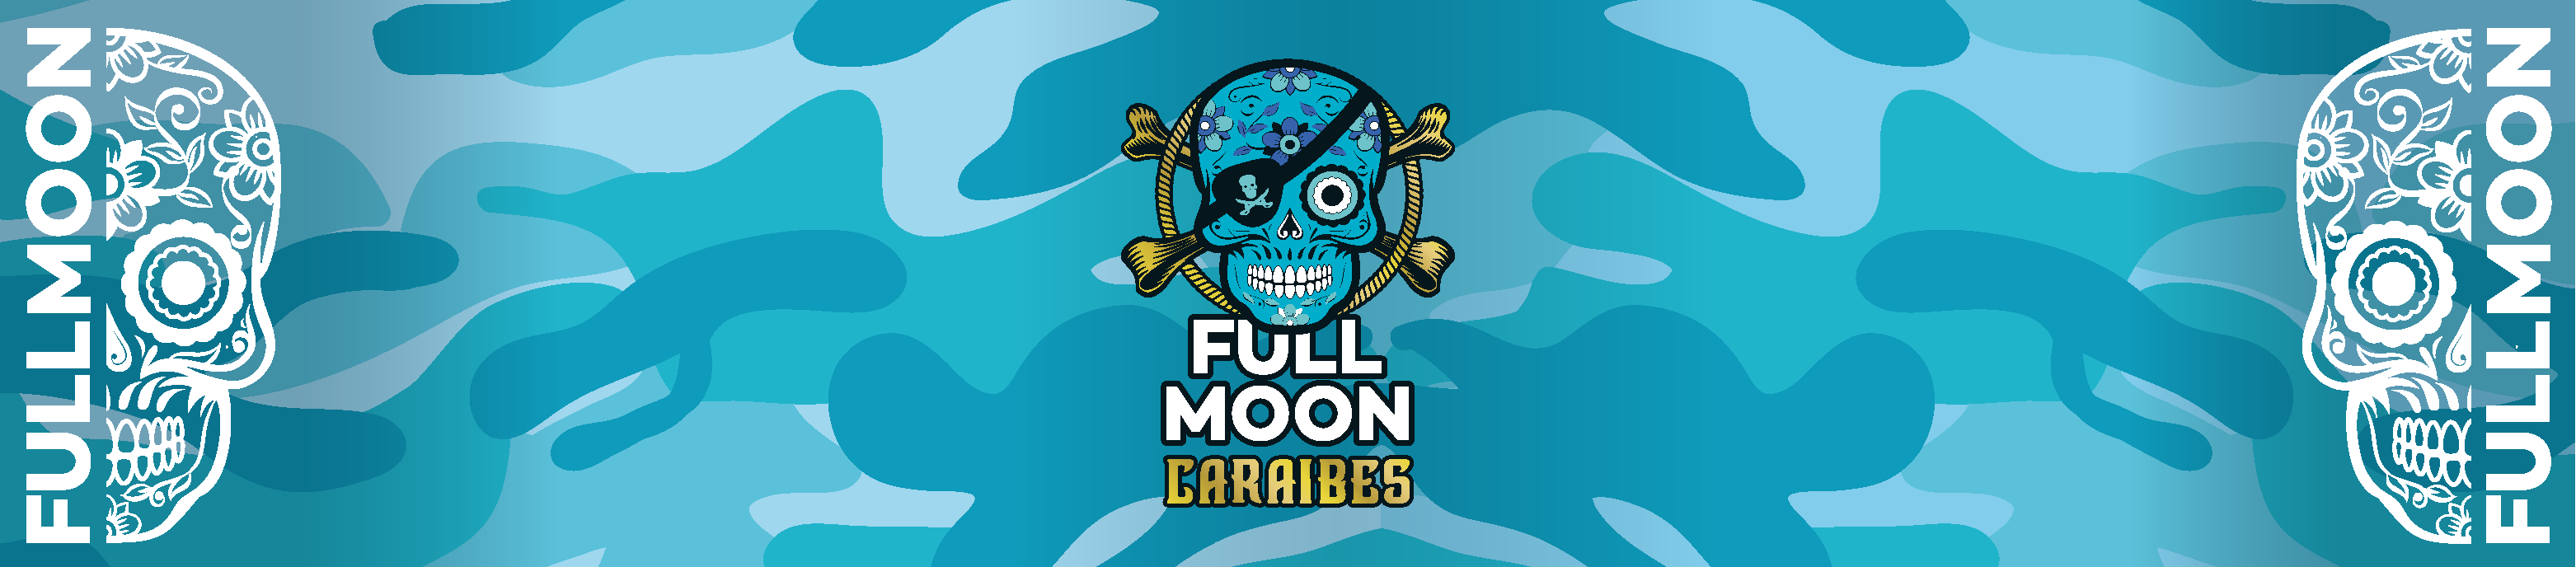 FullMoon-Banner-Produits_Full Moon Banner Dark.png